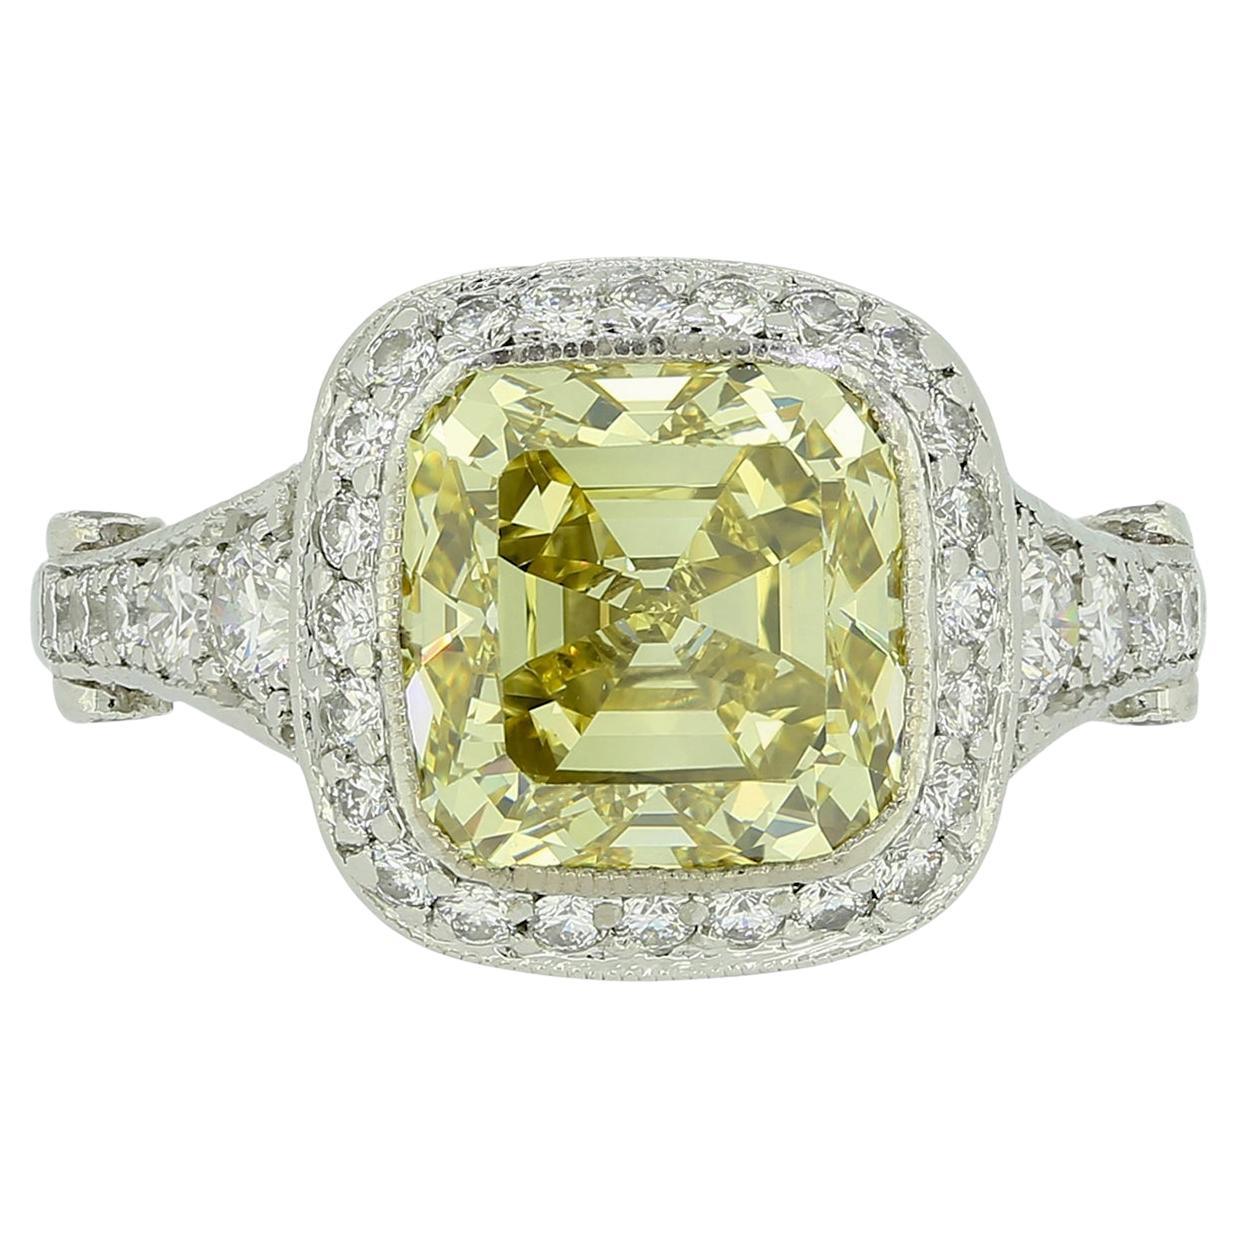 Tiffany & Co. Legacy 4.00 Carat Fancy Intense Yellow Diamond Engagement Ring